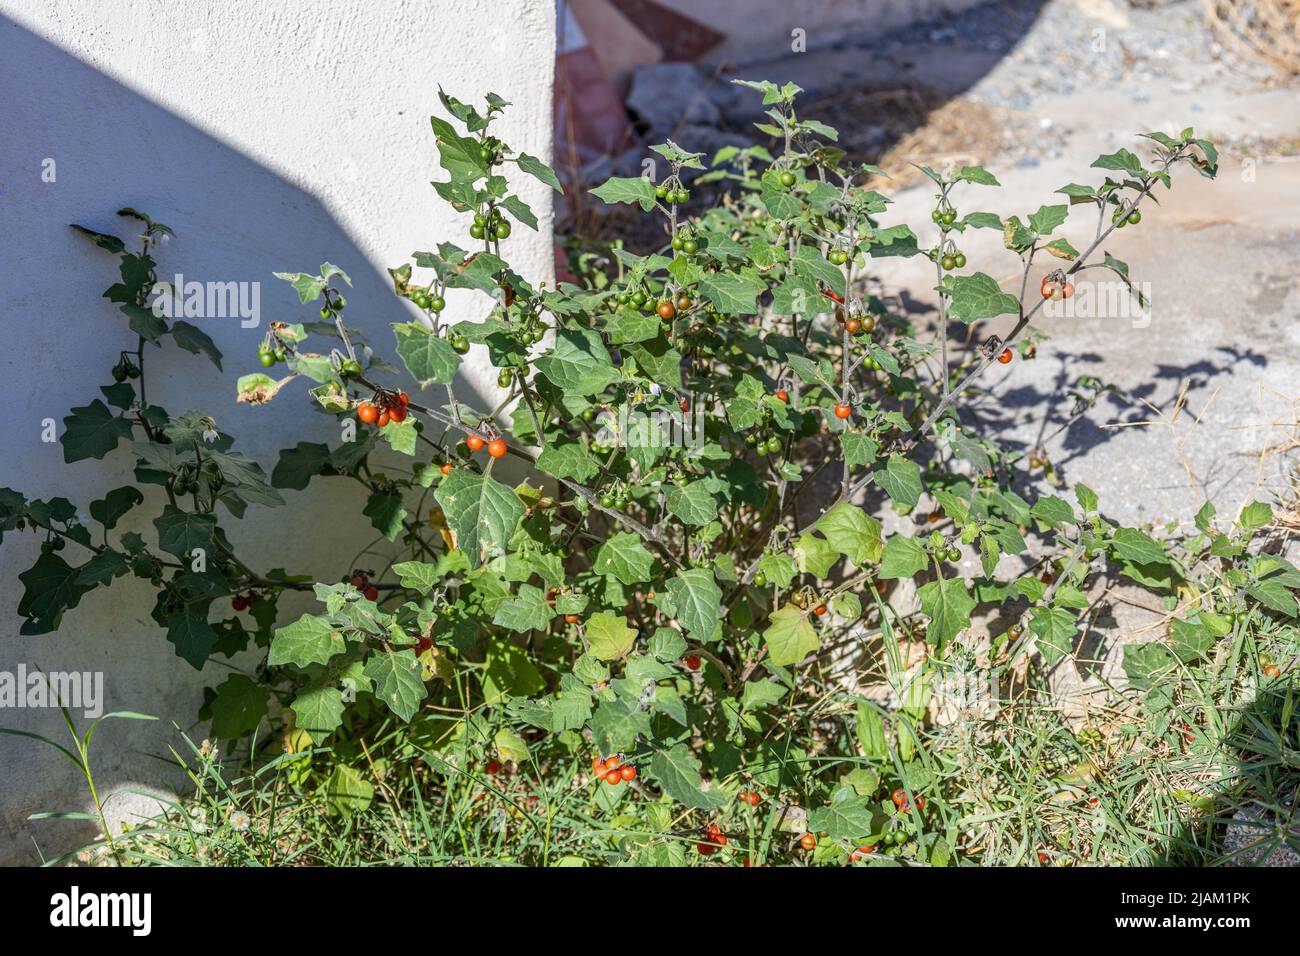 Solanum villosum, Hairy Nightshade Plant with Red Berries Stock Photo